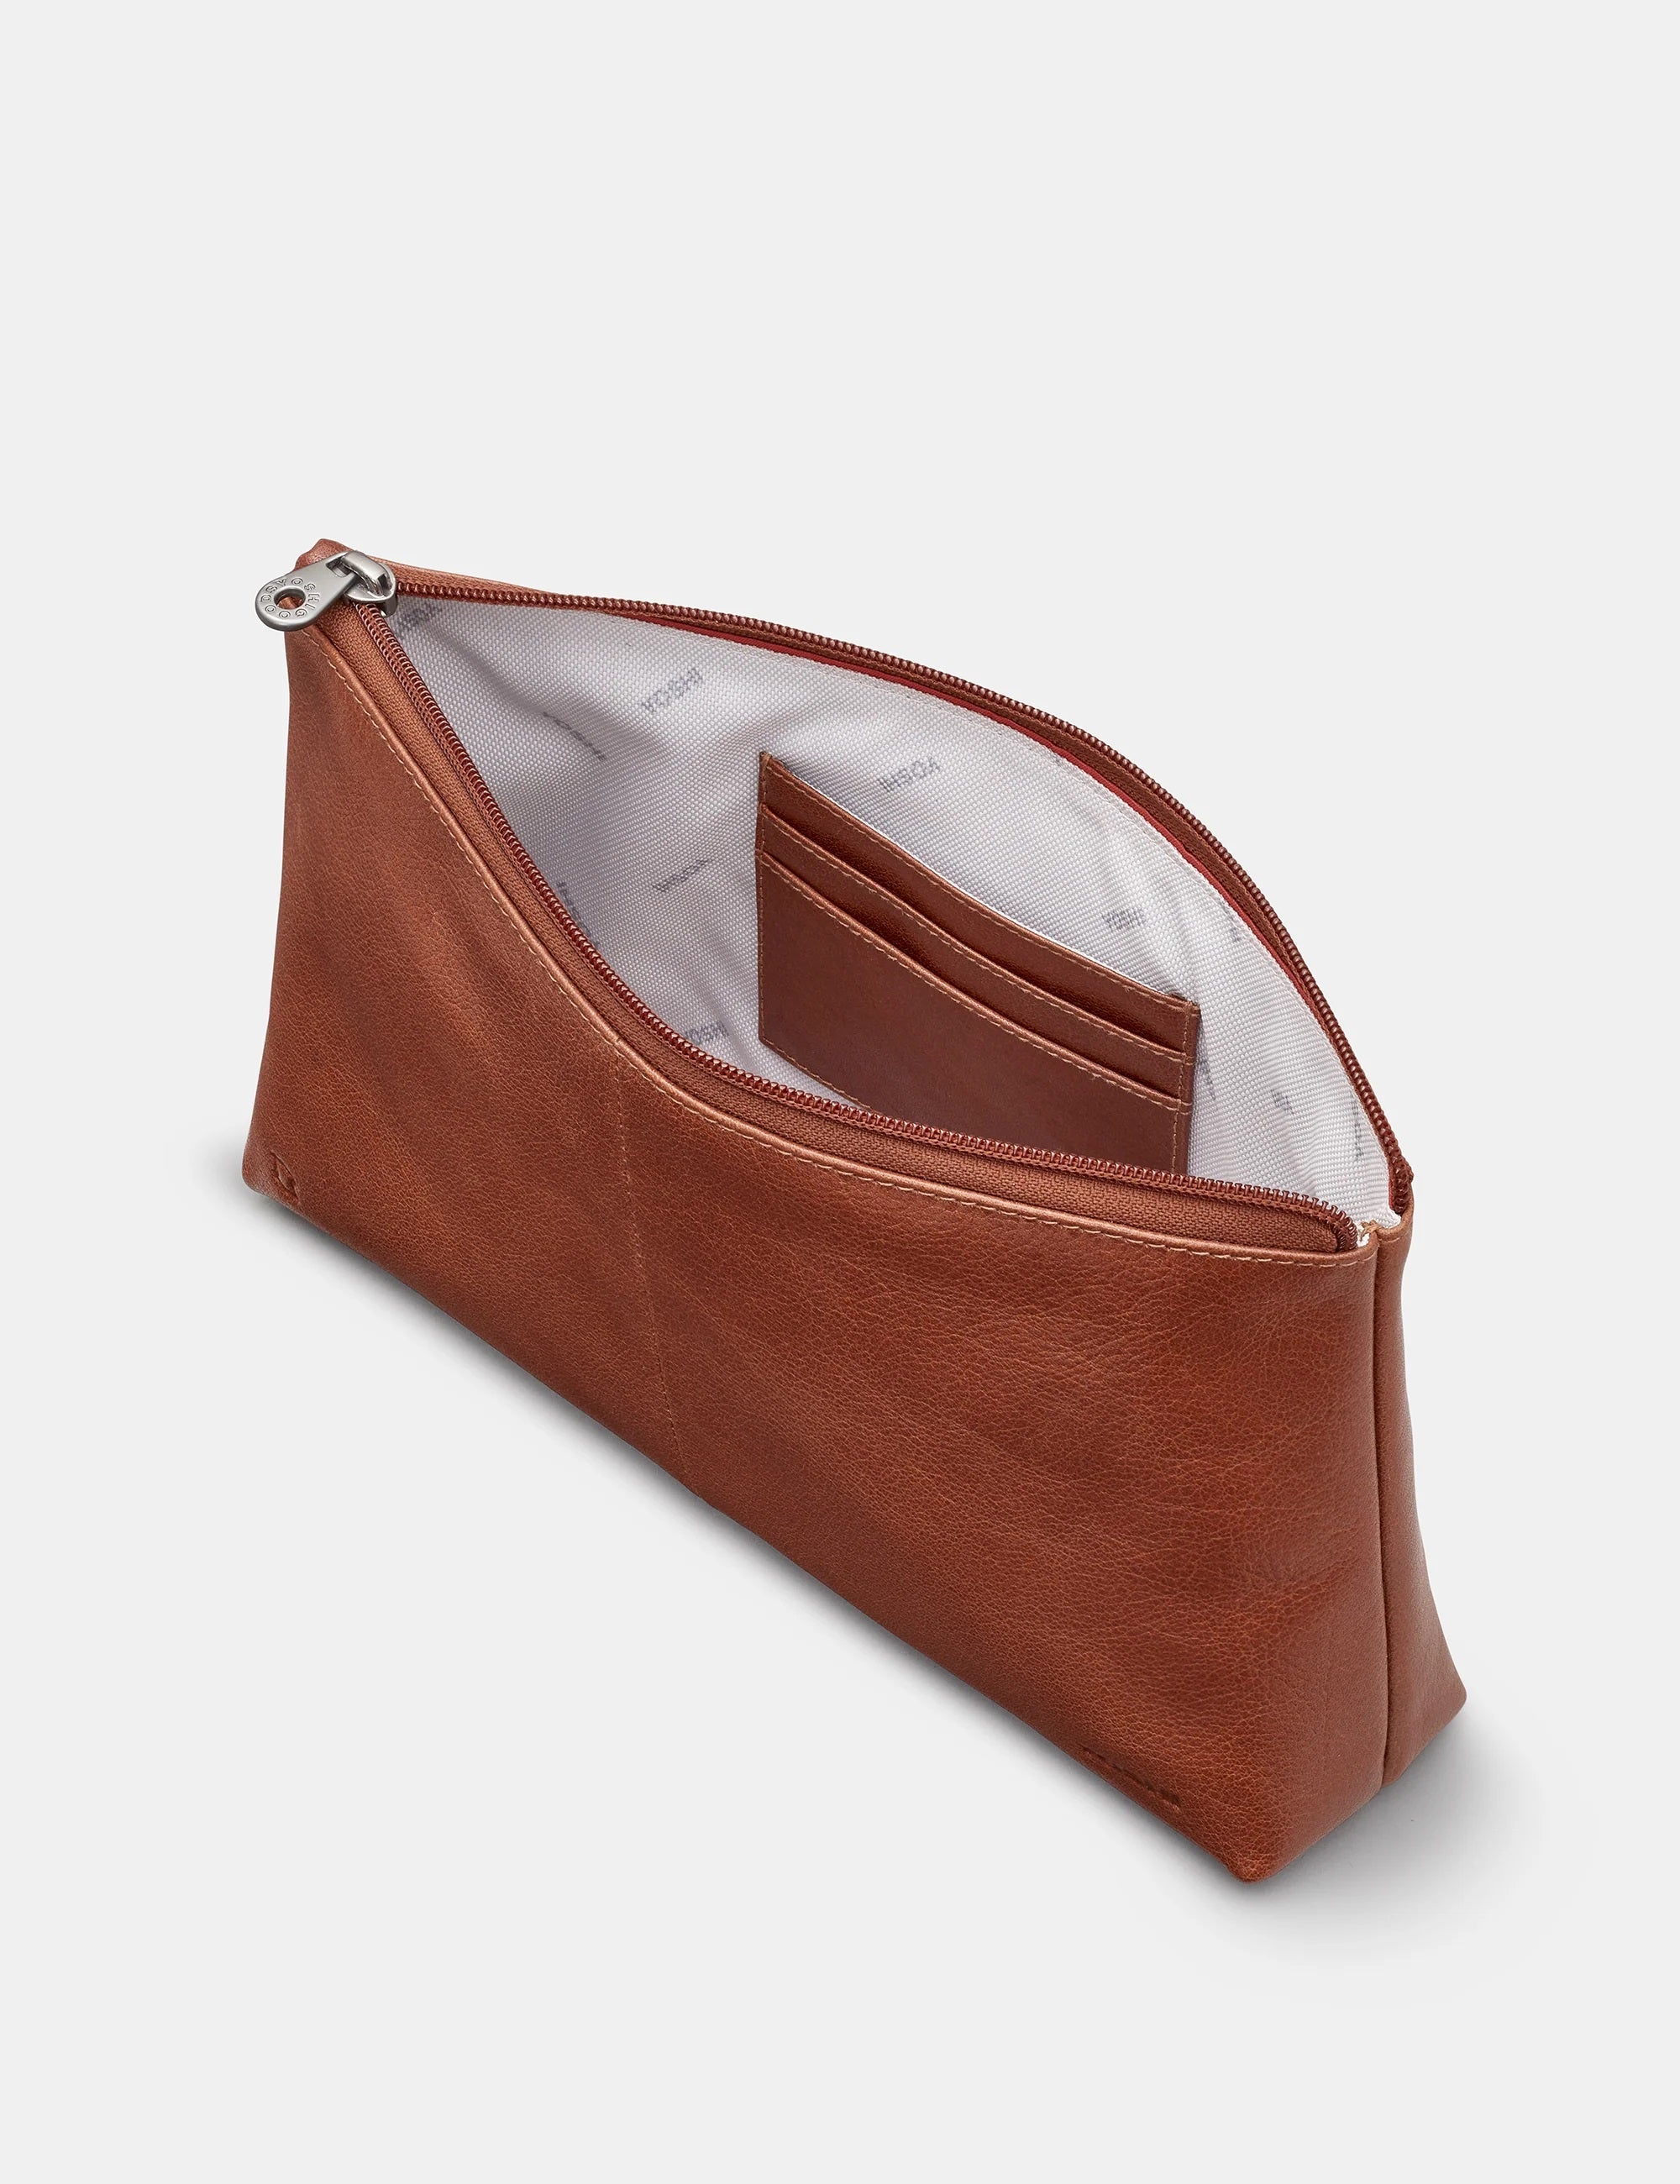 Kensington Leather Clutch Bag - Brown